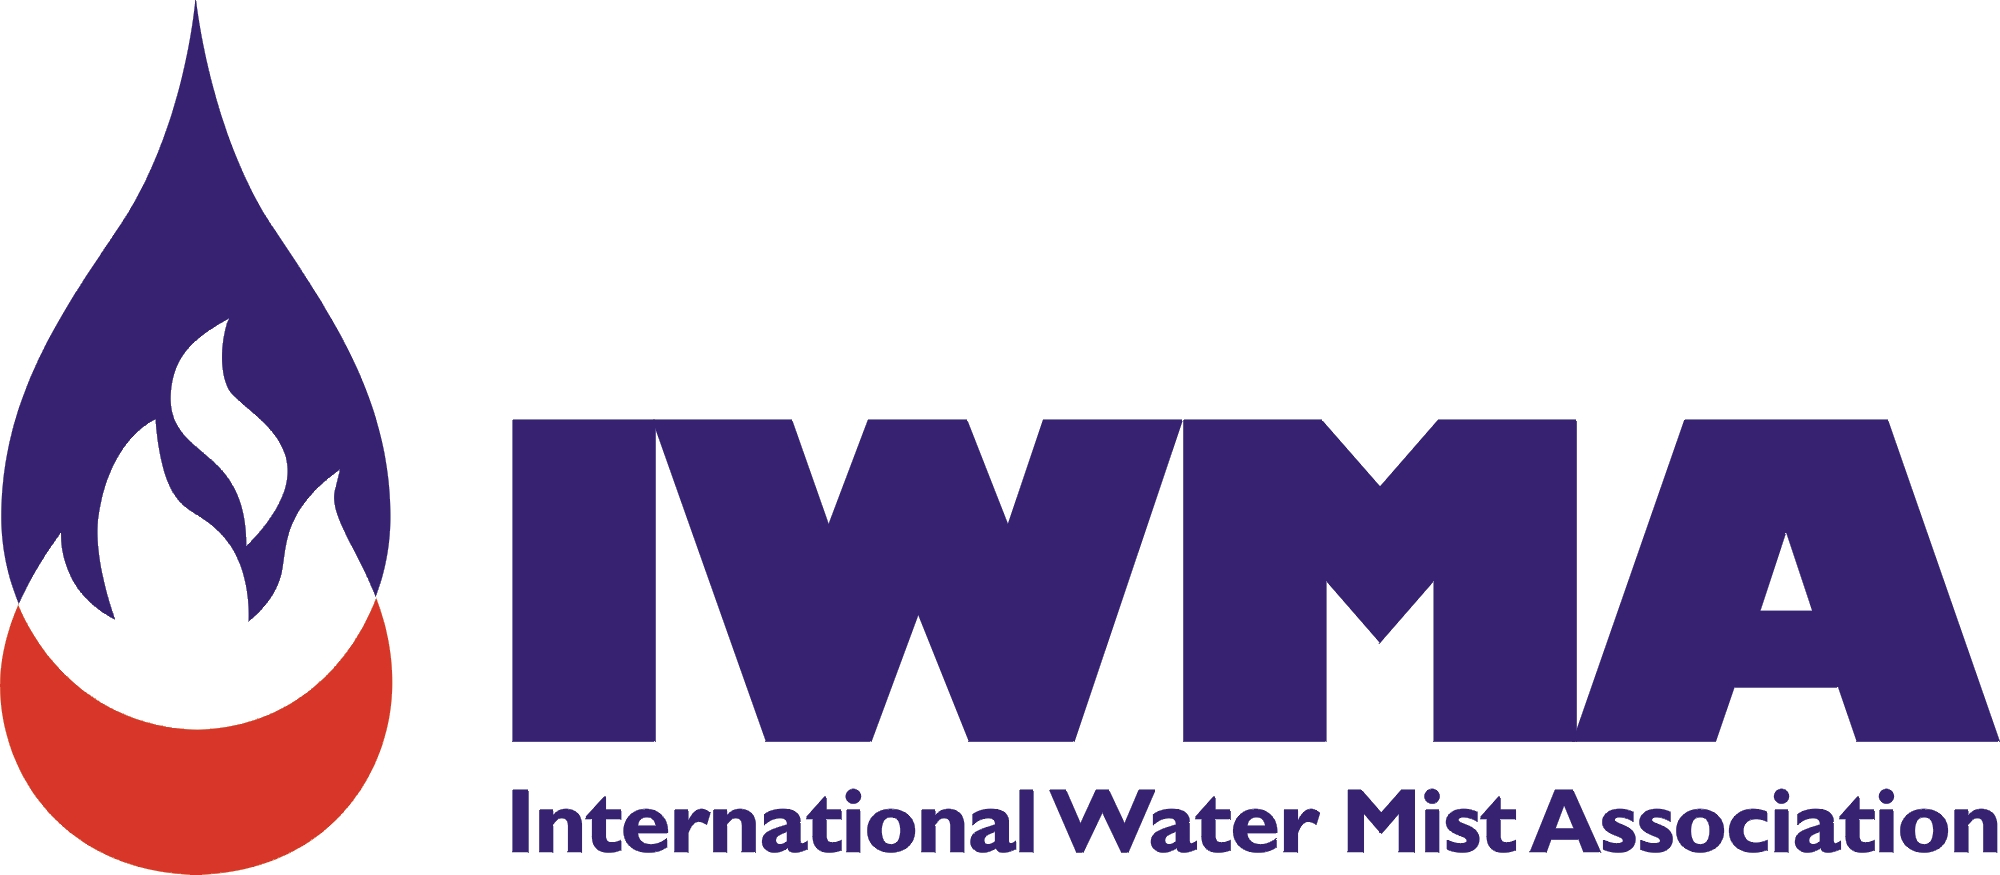 International Water Mist Association